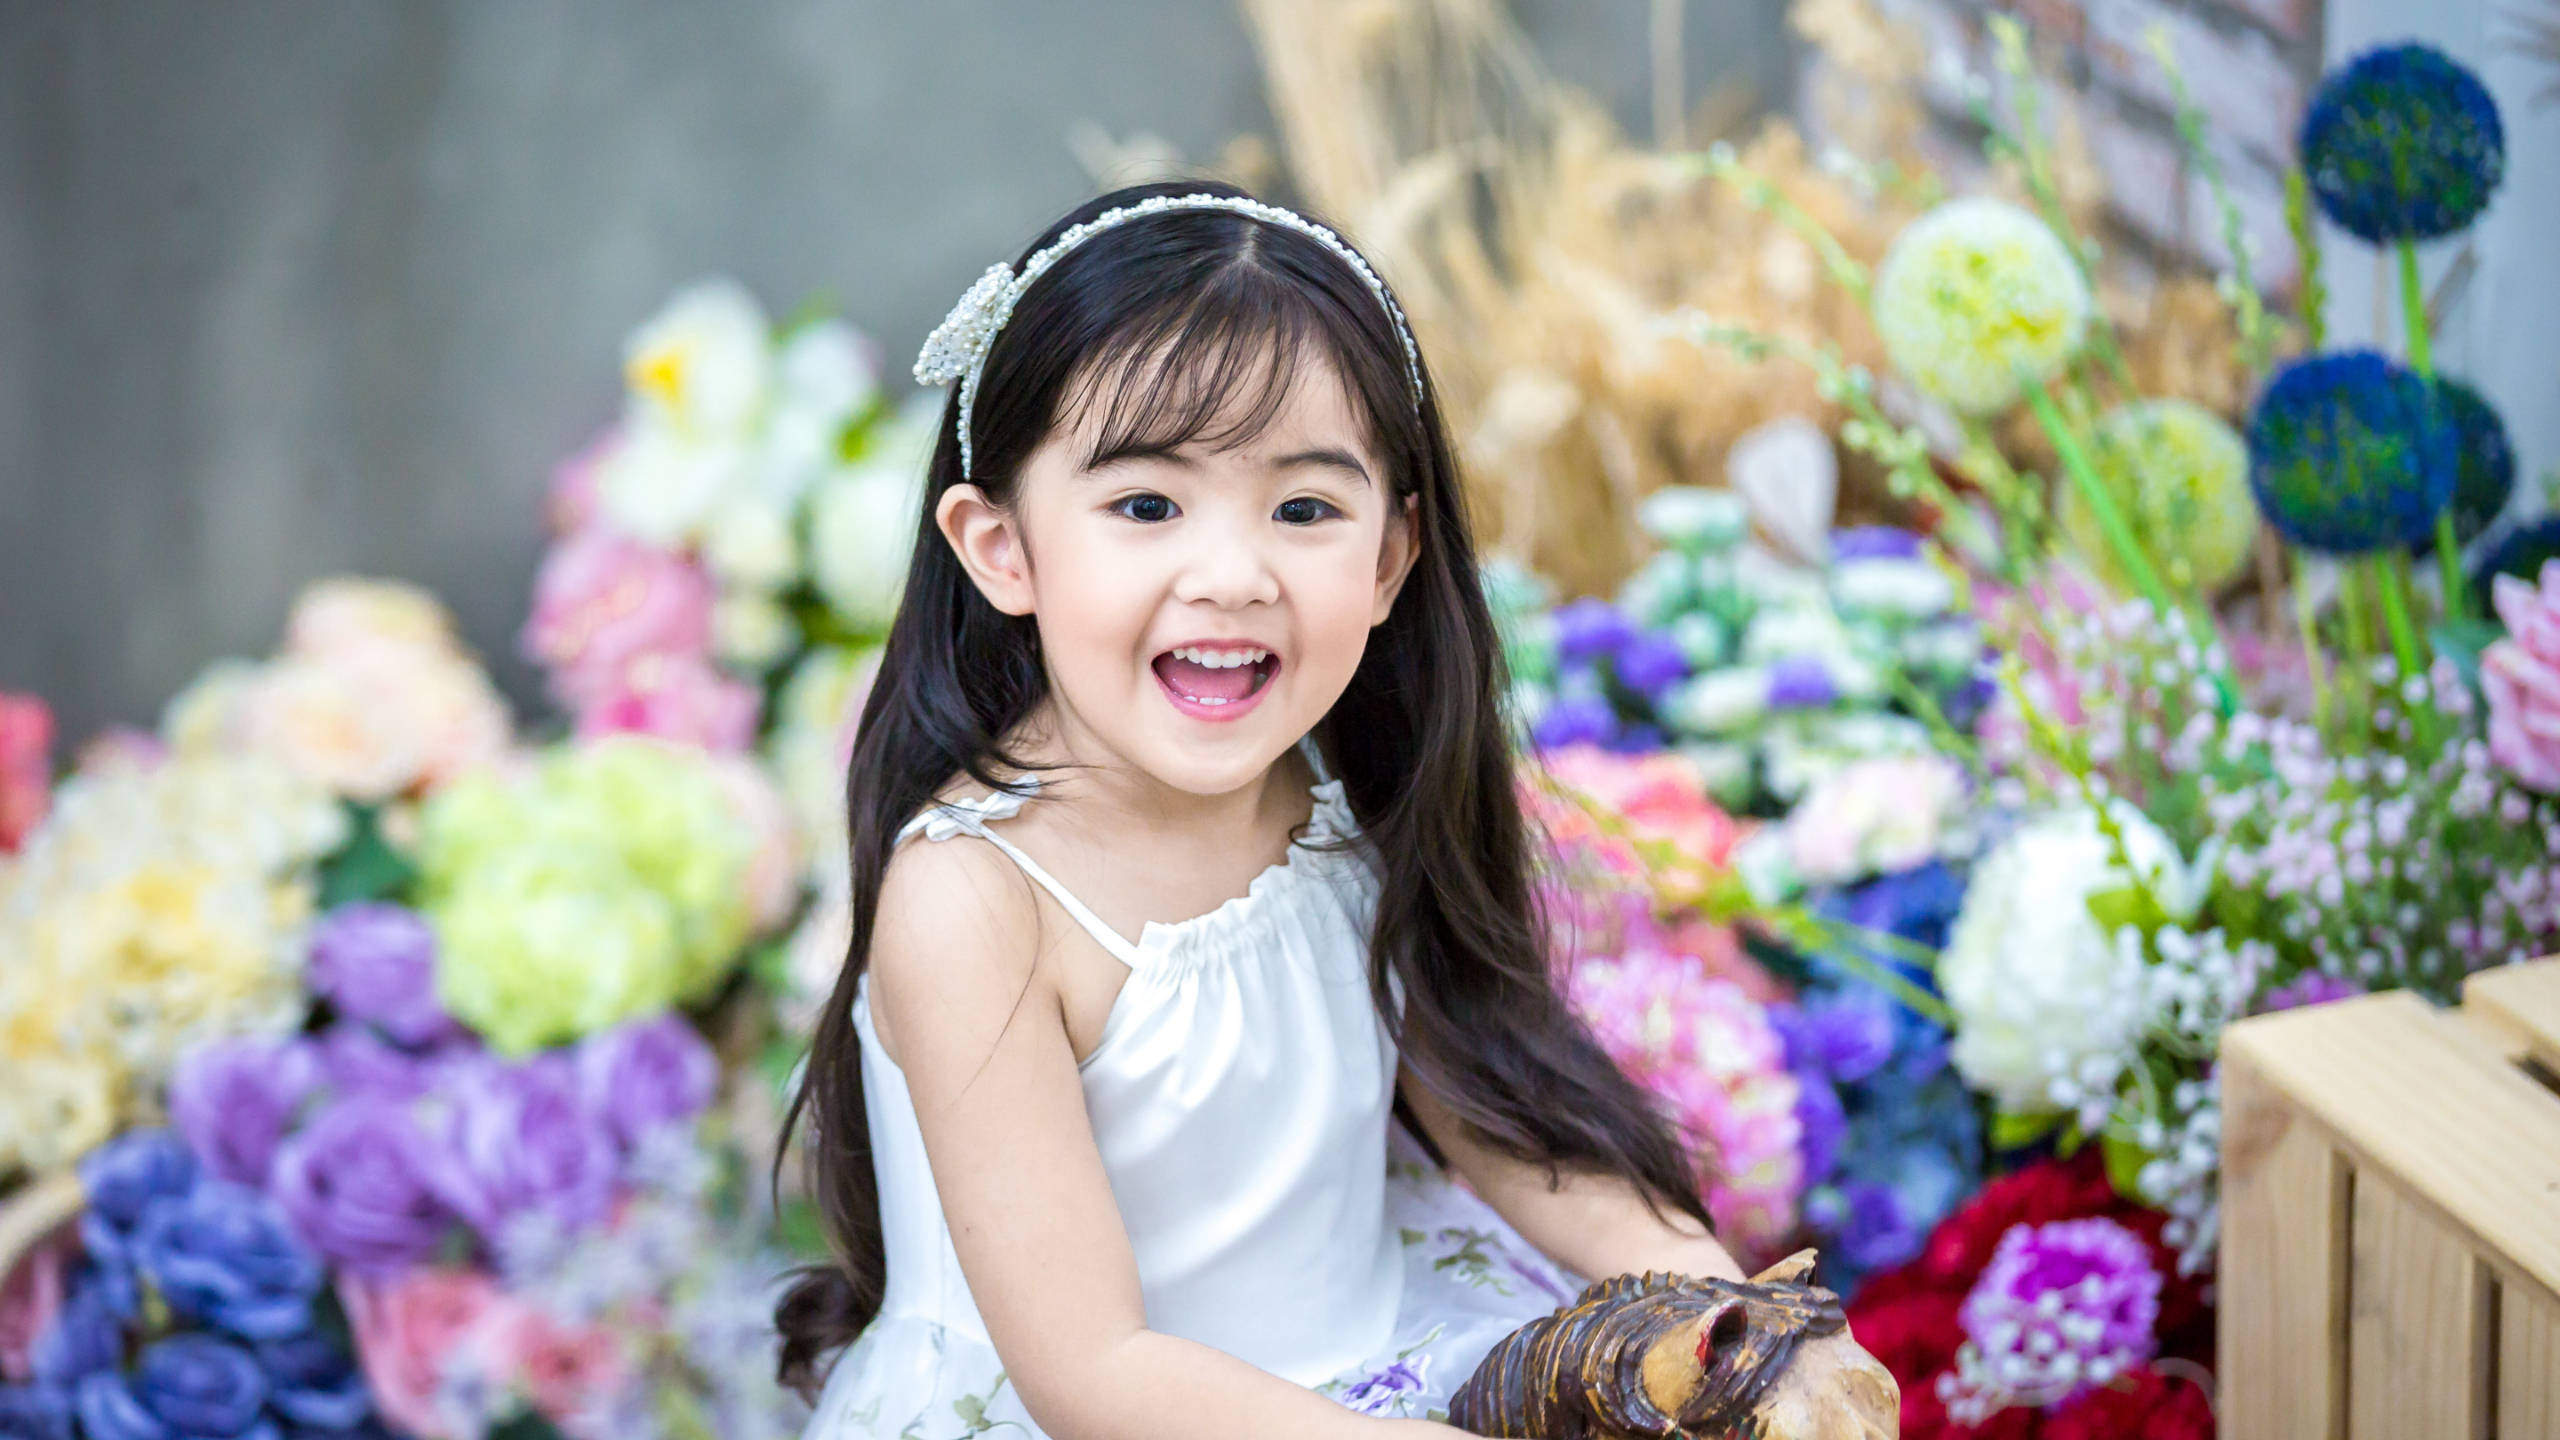 Download Cute Smile Girl Flowers Wallpaper 